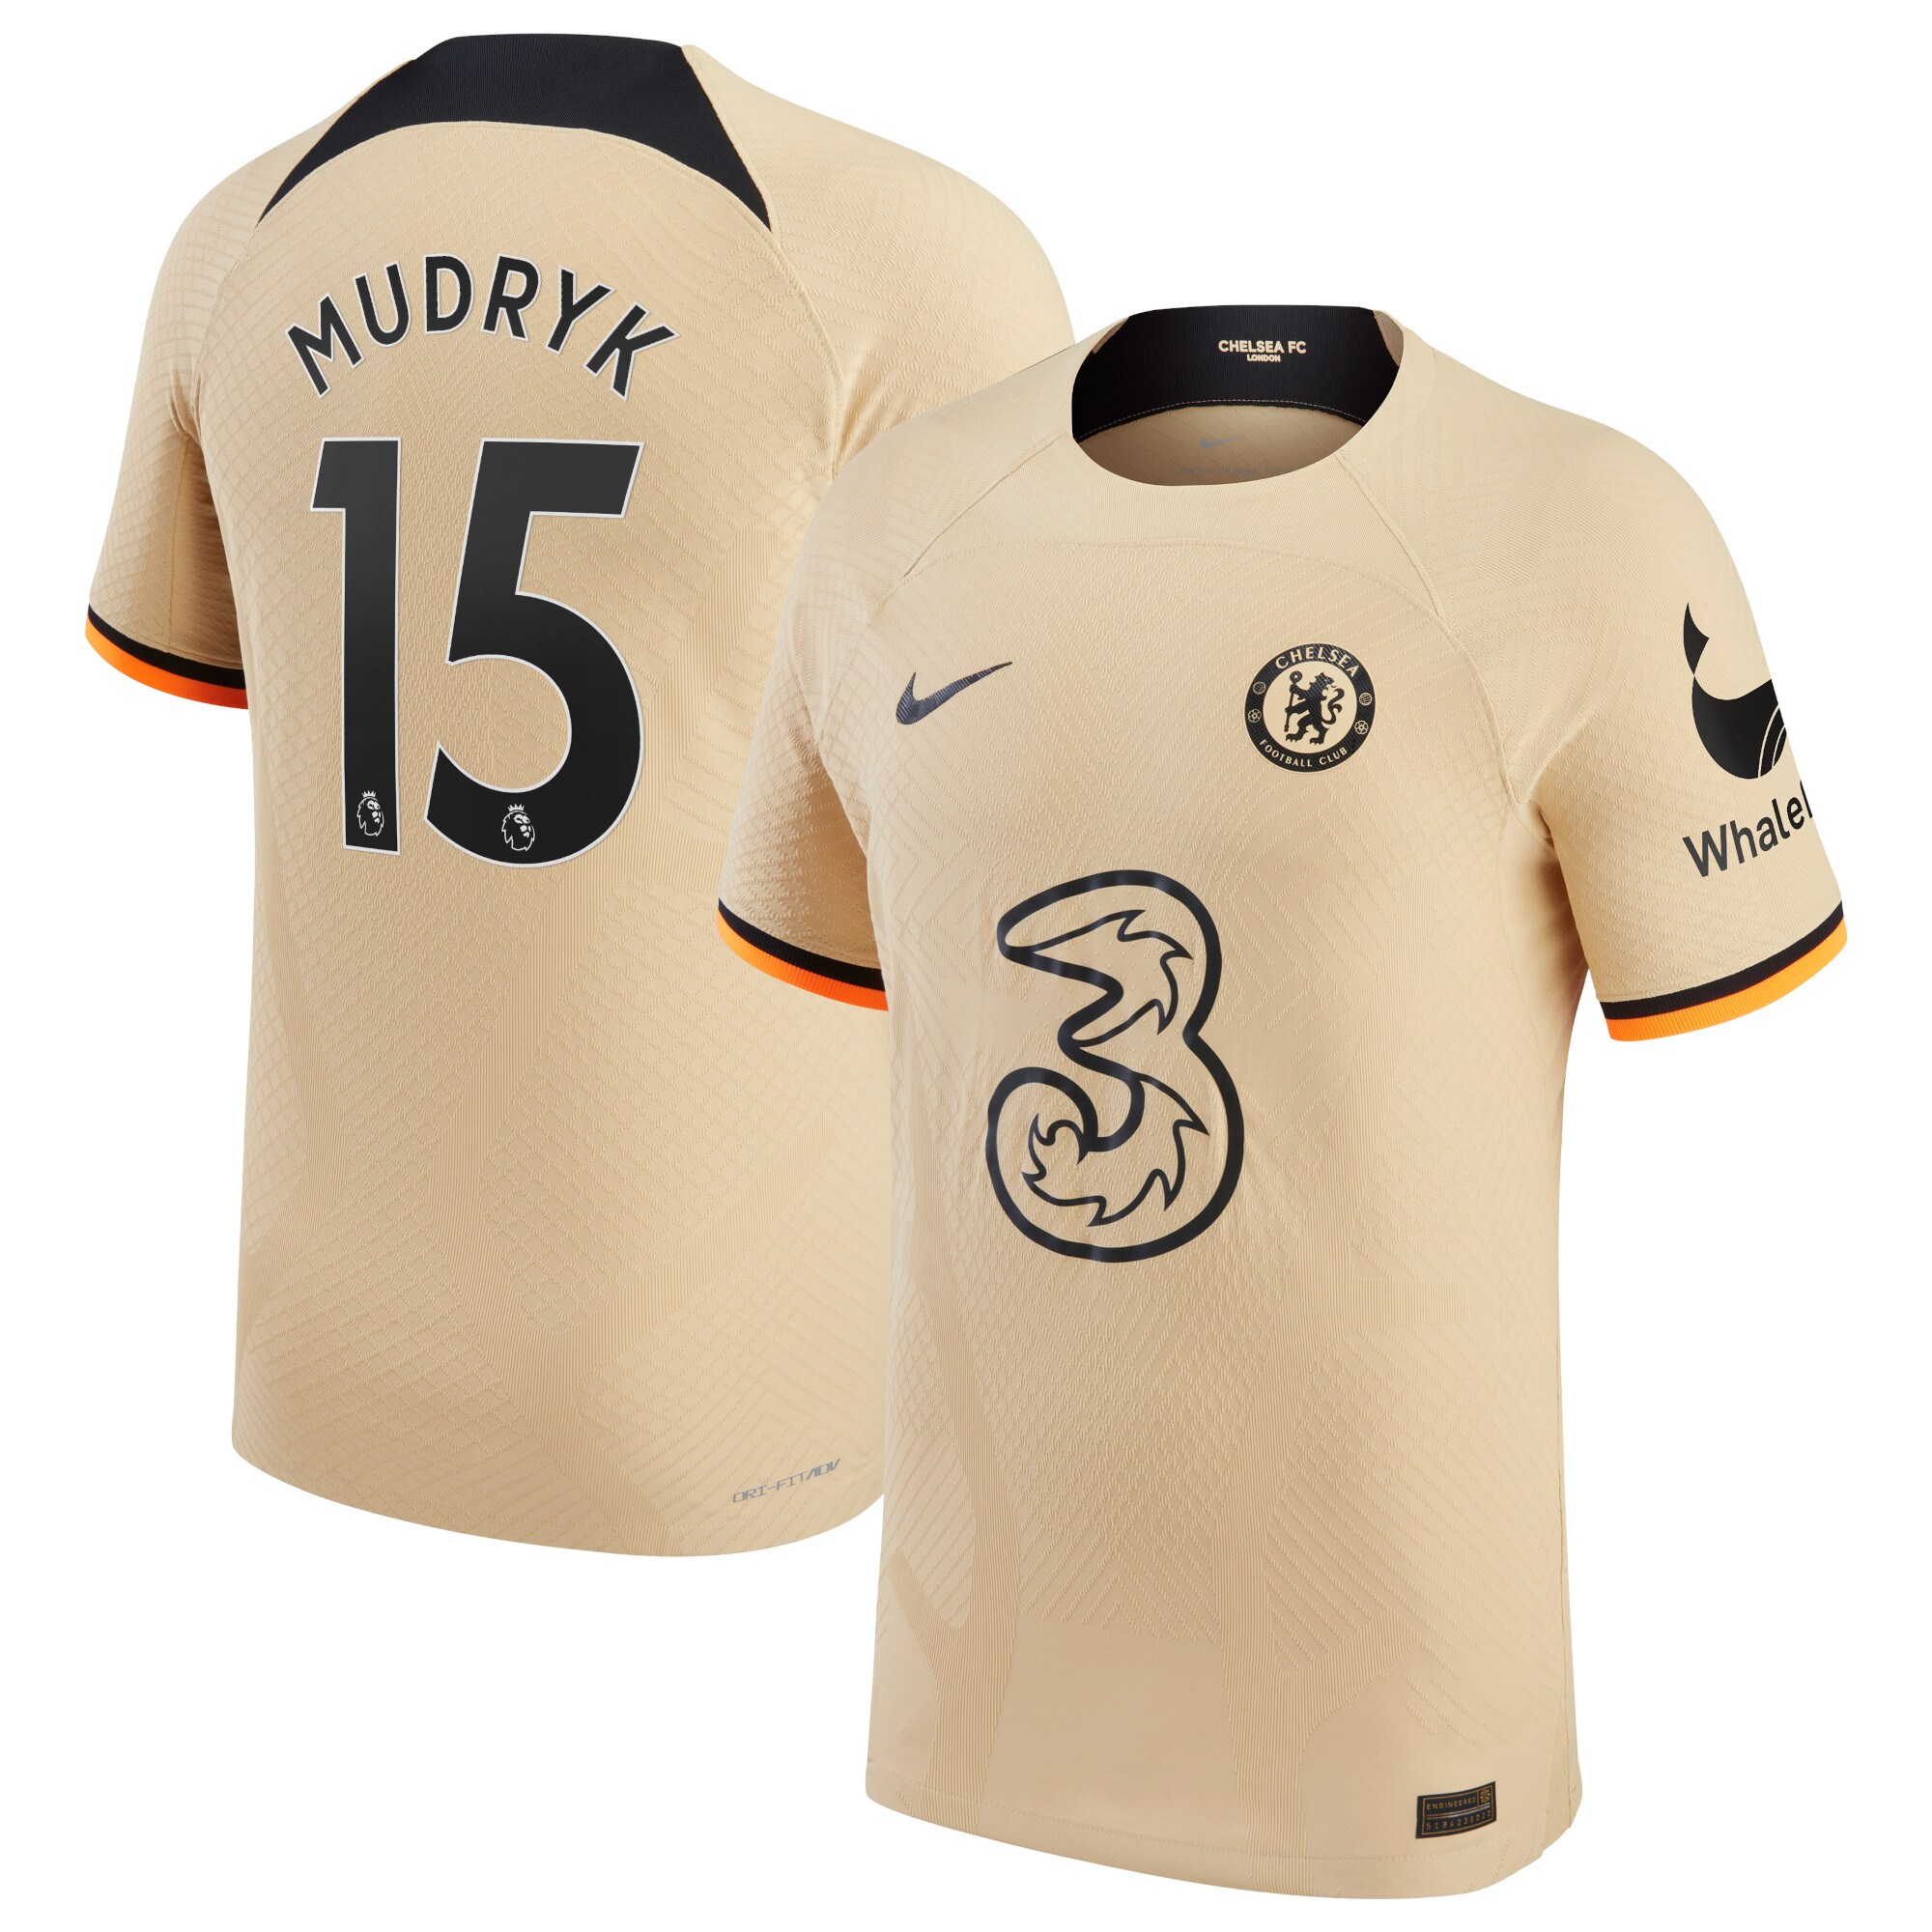 Chelsea Third Vapor Match Shirt 2022-23 with Mudryk 15 printing